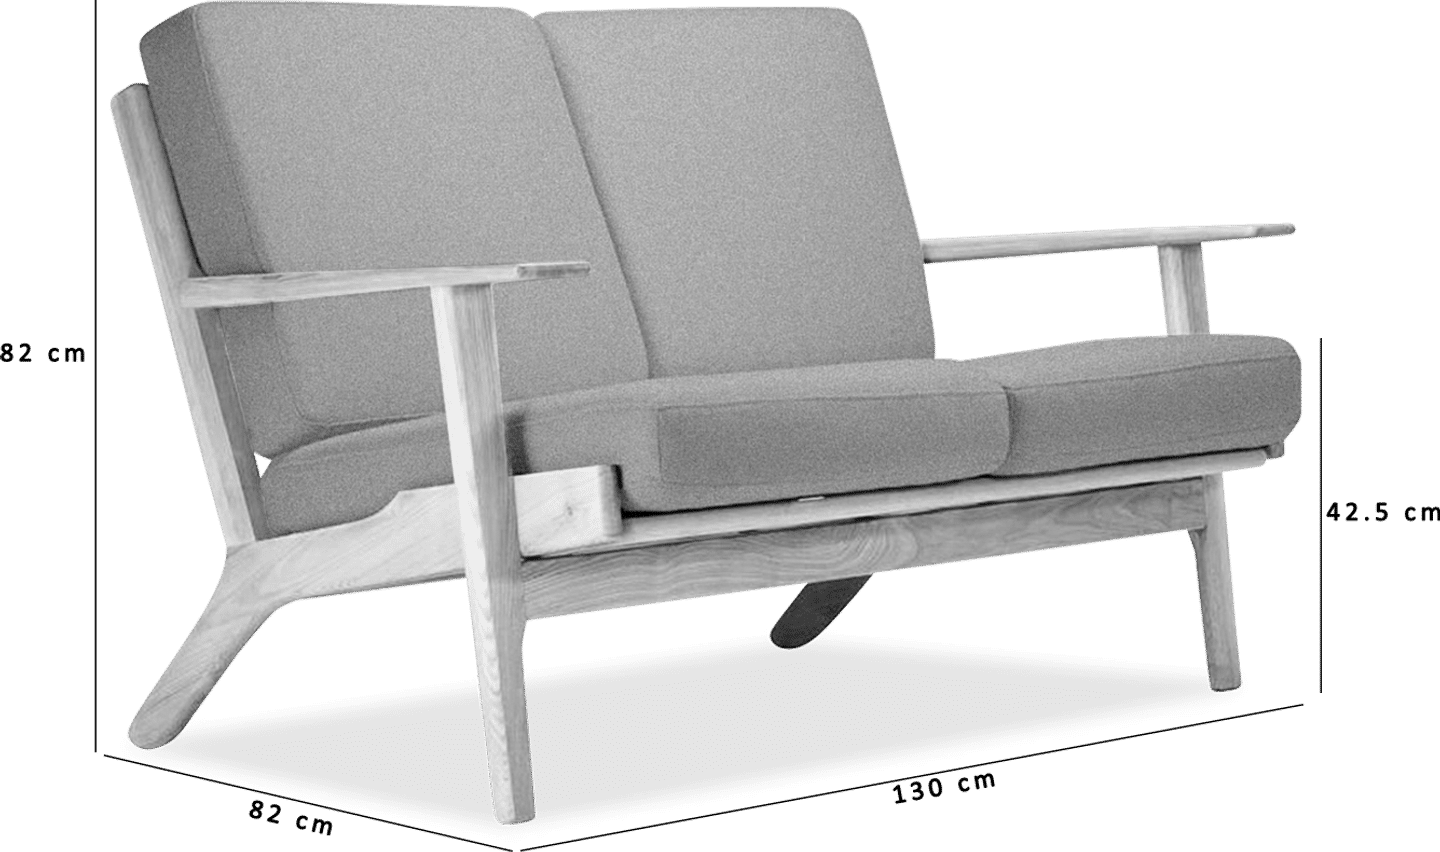 GE 290 Plank Loveseat 2 Seater Sofa Light Pebble Grey/Ash Wood image.